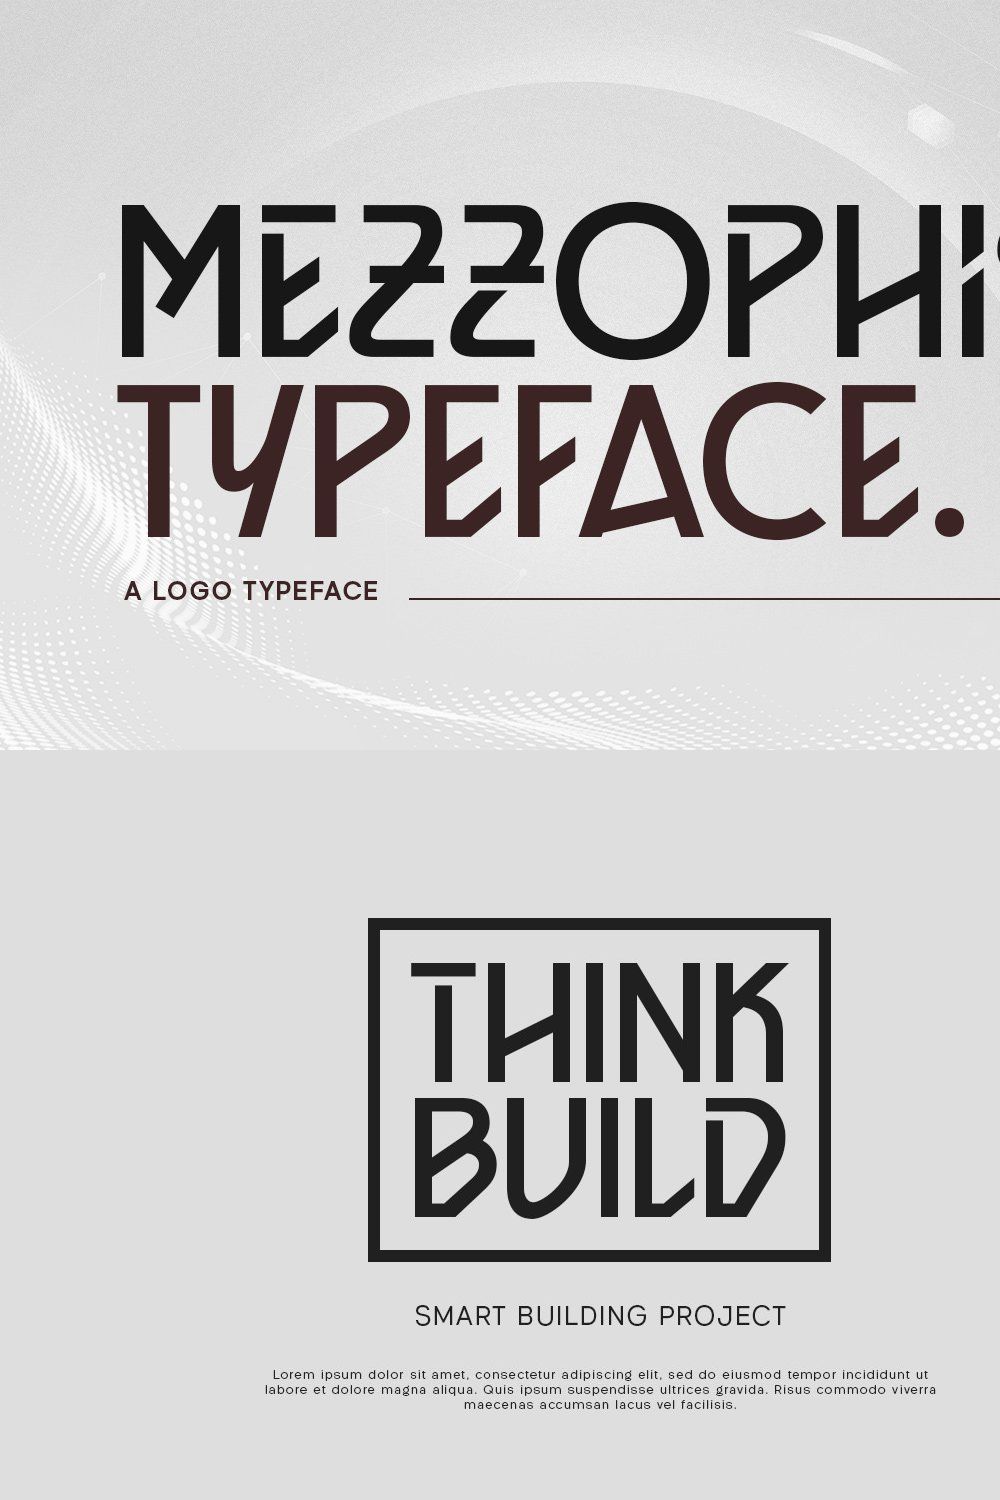 Mezzophis Typeface pinterest preview image.